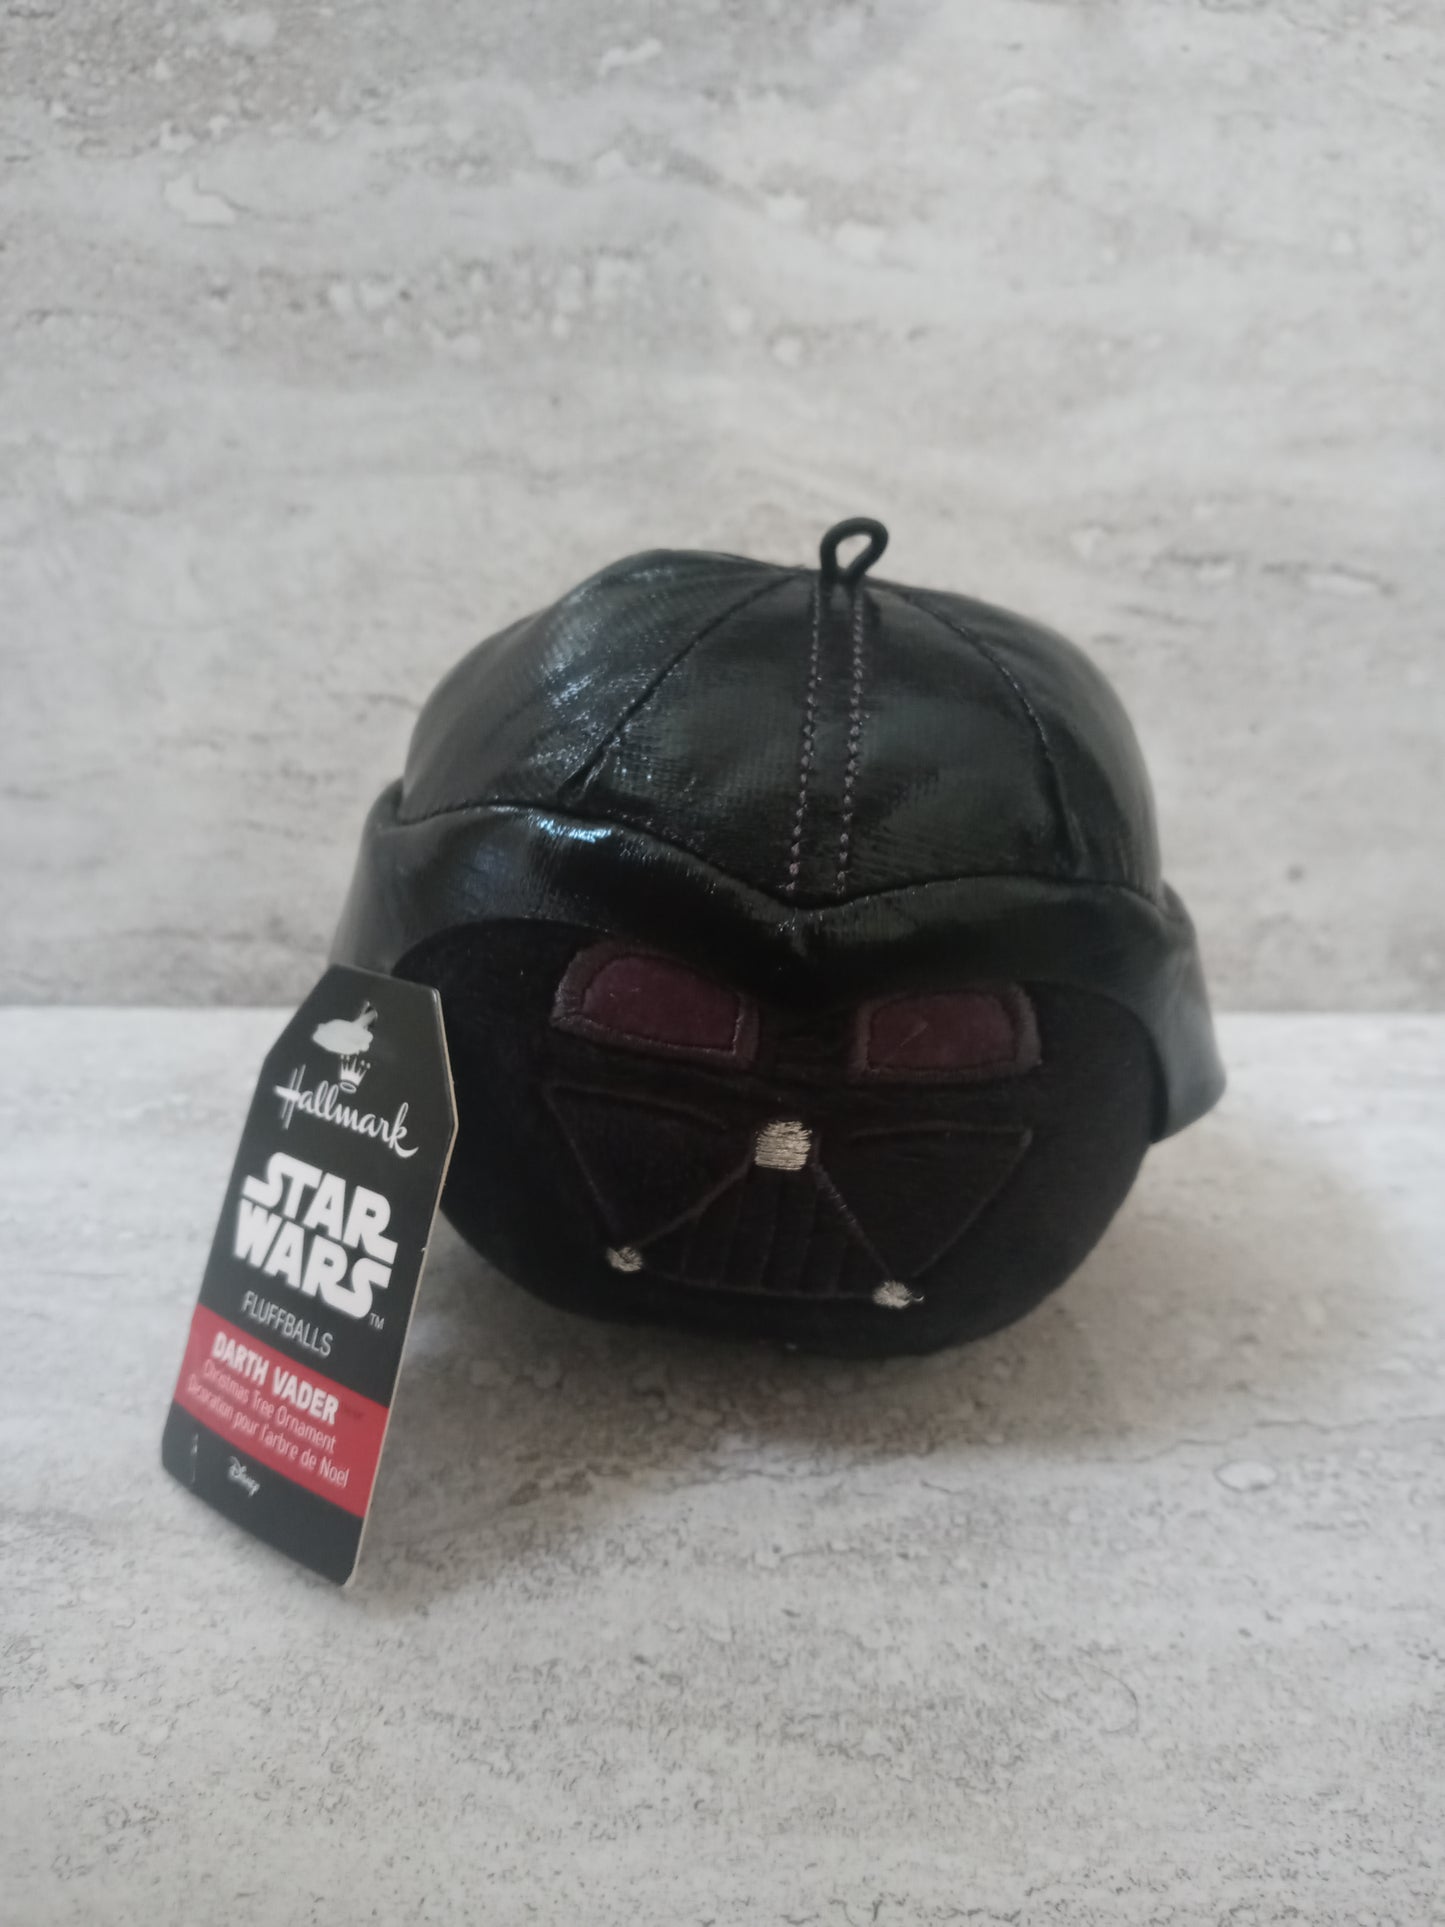 Hallmark Plush Toy Stuffed Animal, toy Star Wars Puffball, Darth Vader